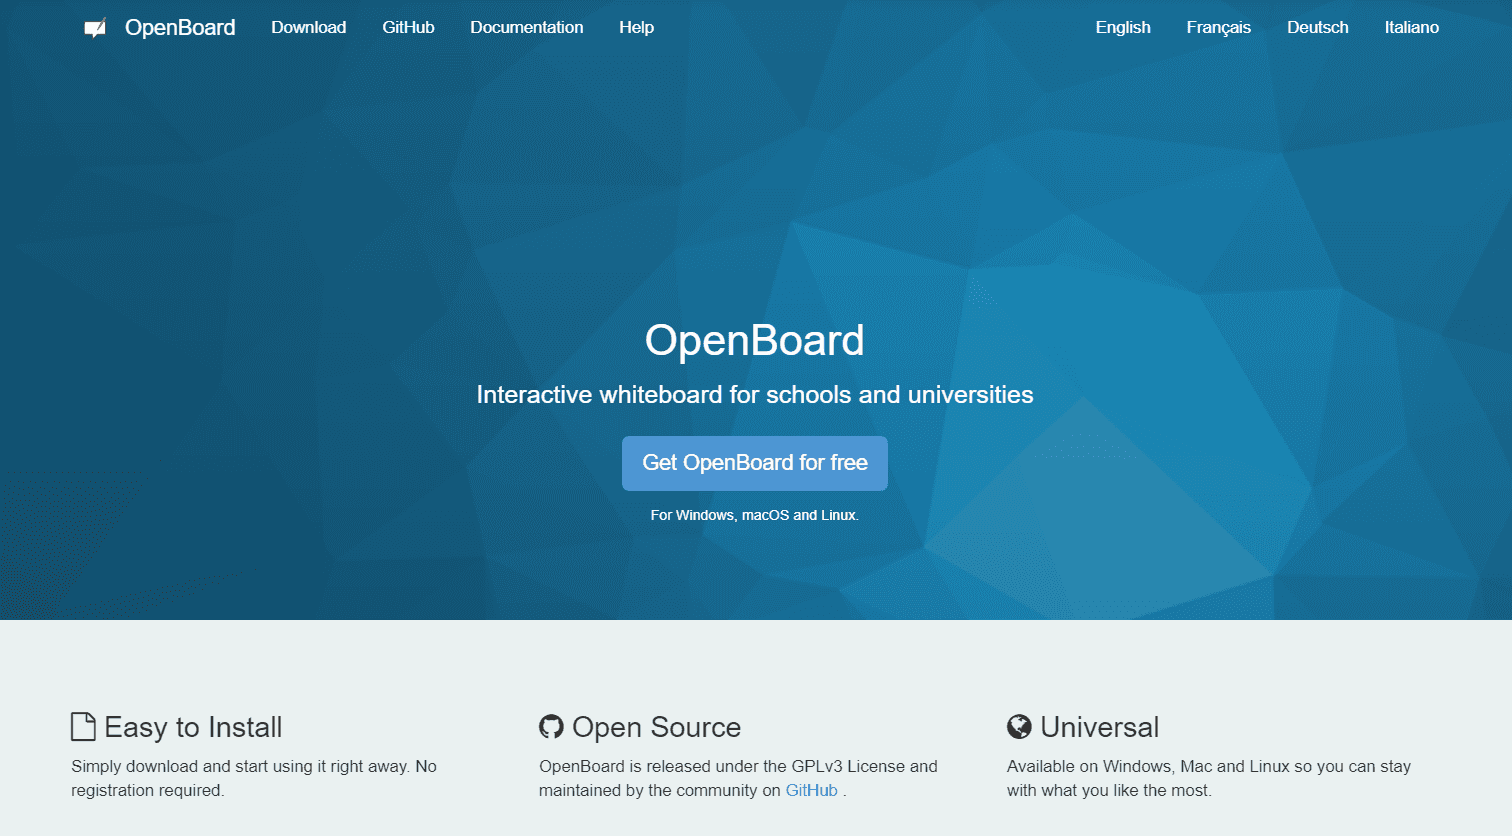 OpenBoard homepage